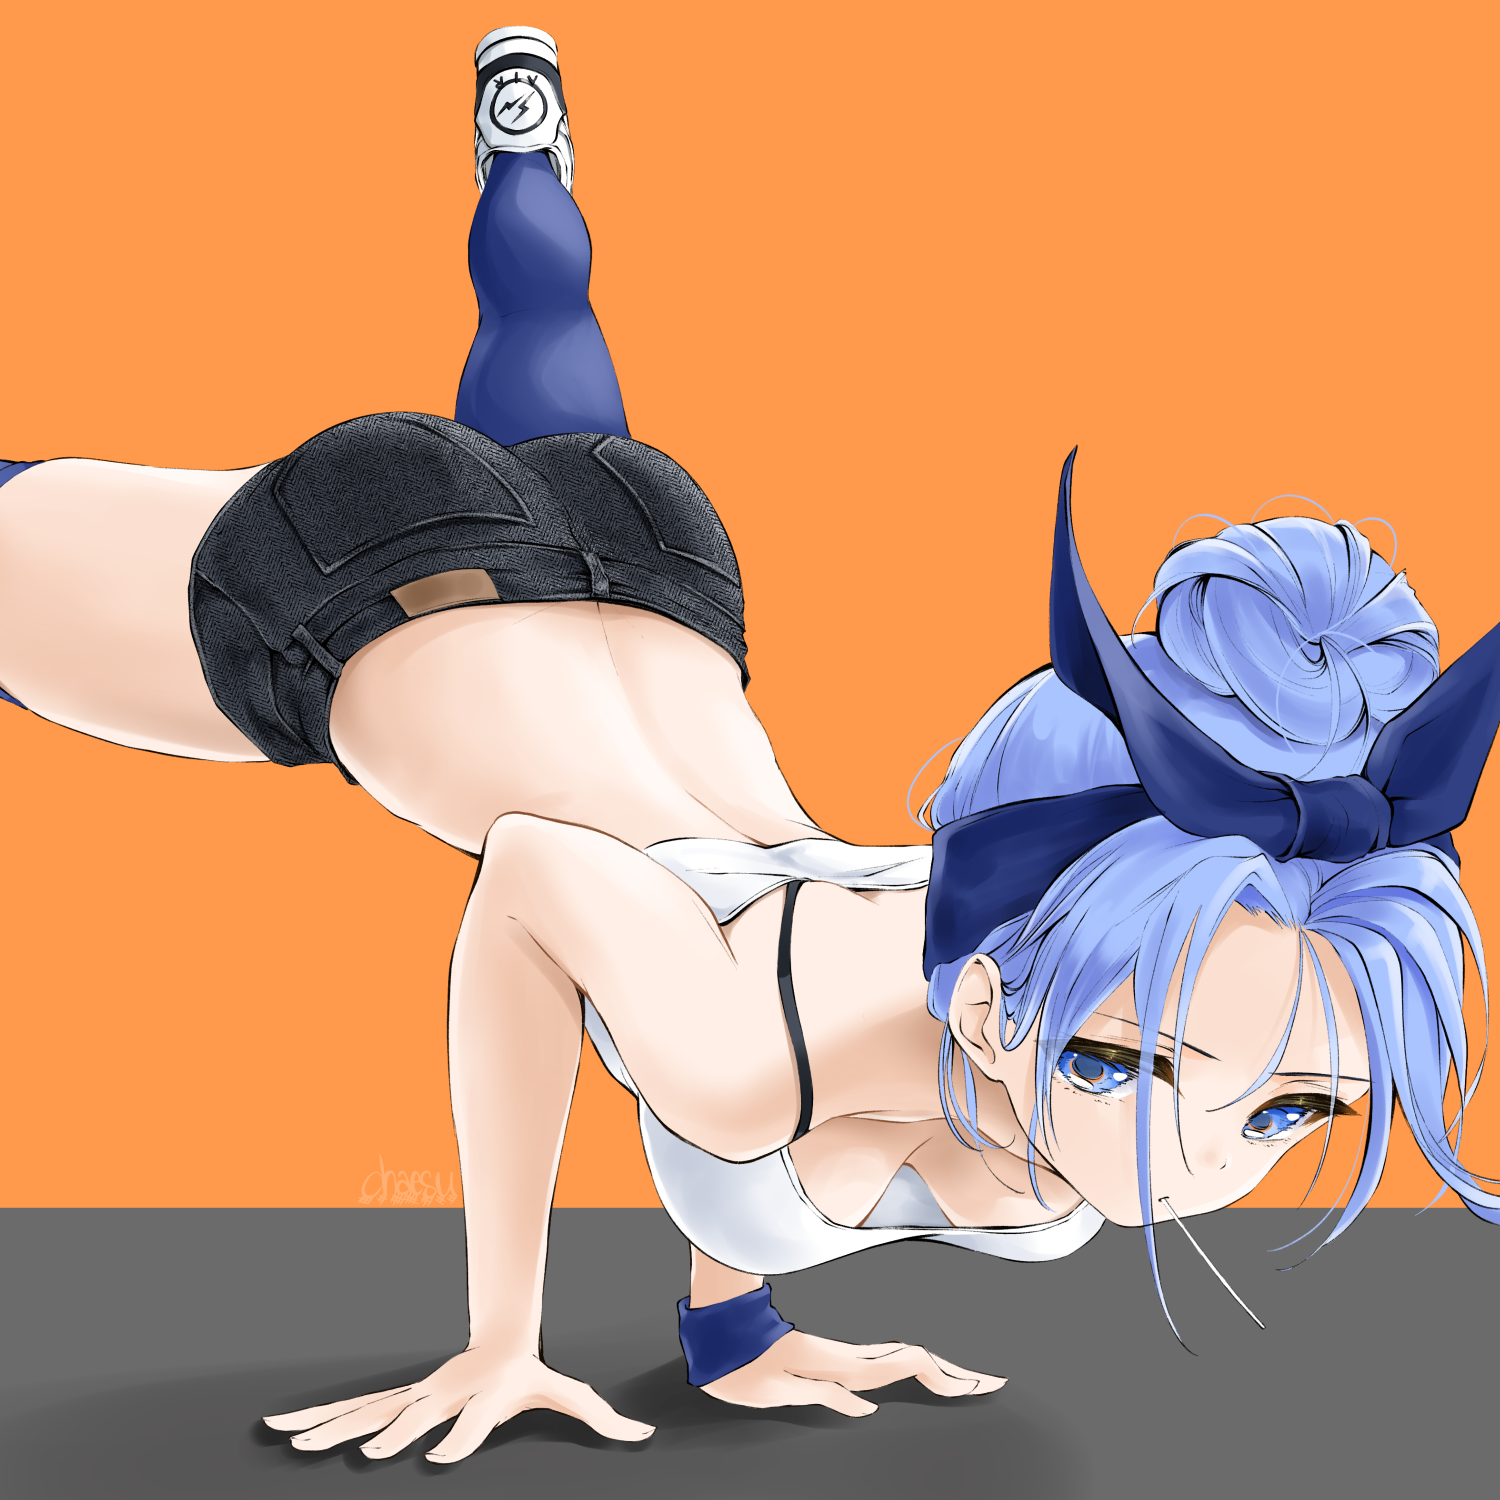 Anime 1500x1500 anime anime girls digital art artwork Chaesu handstand thigh-highs